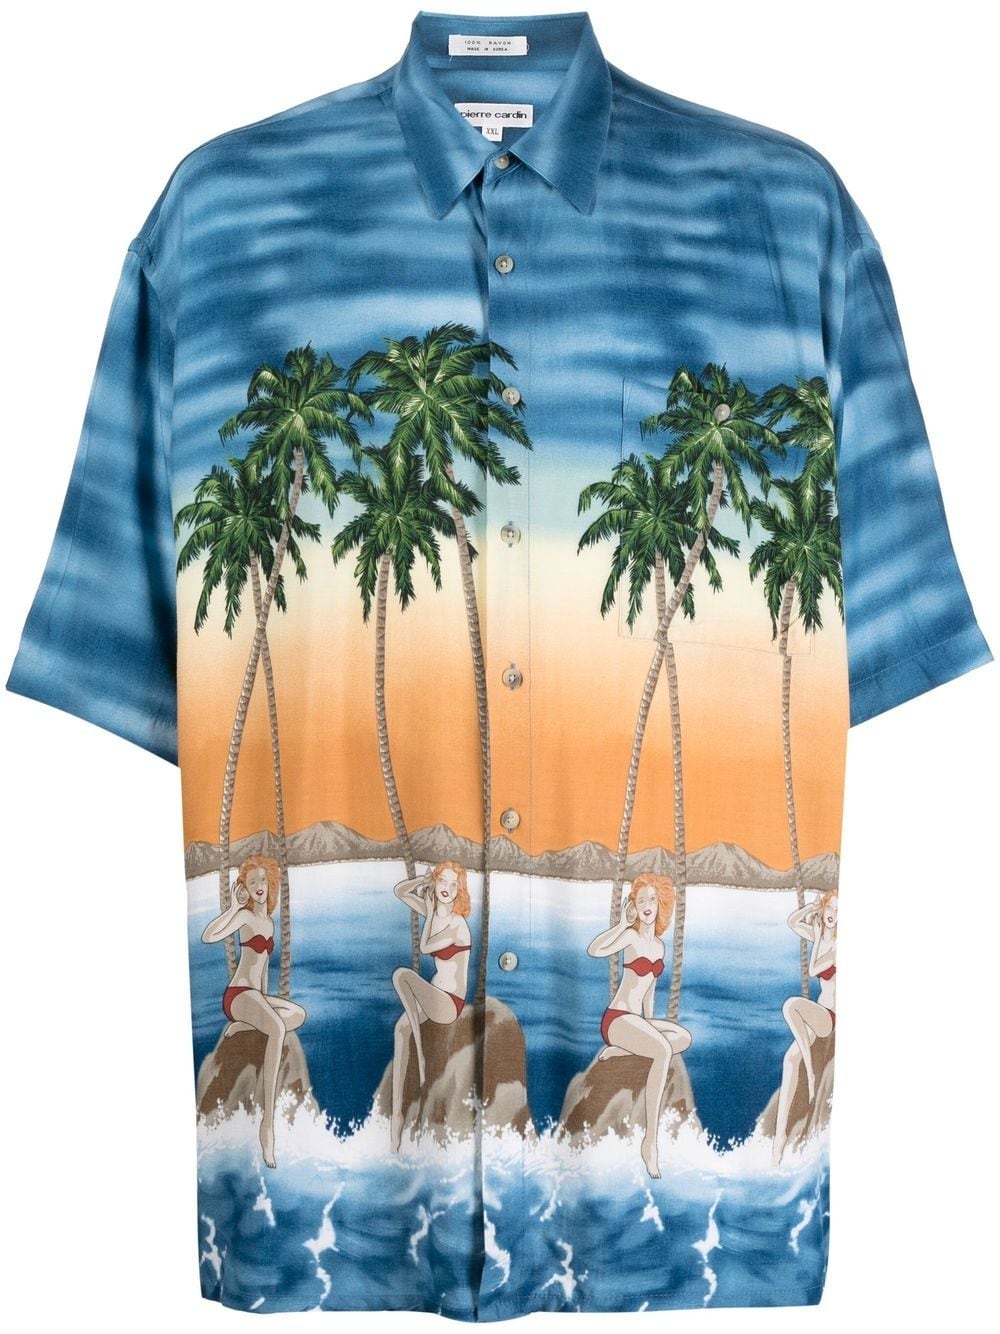 1990s palm tree-print shirt